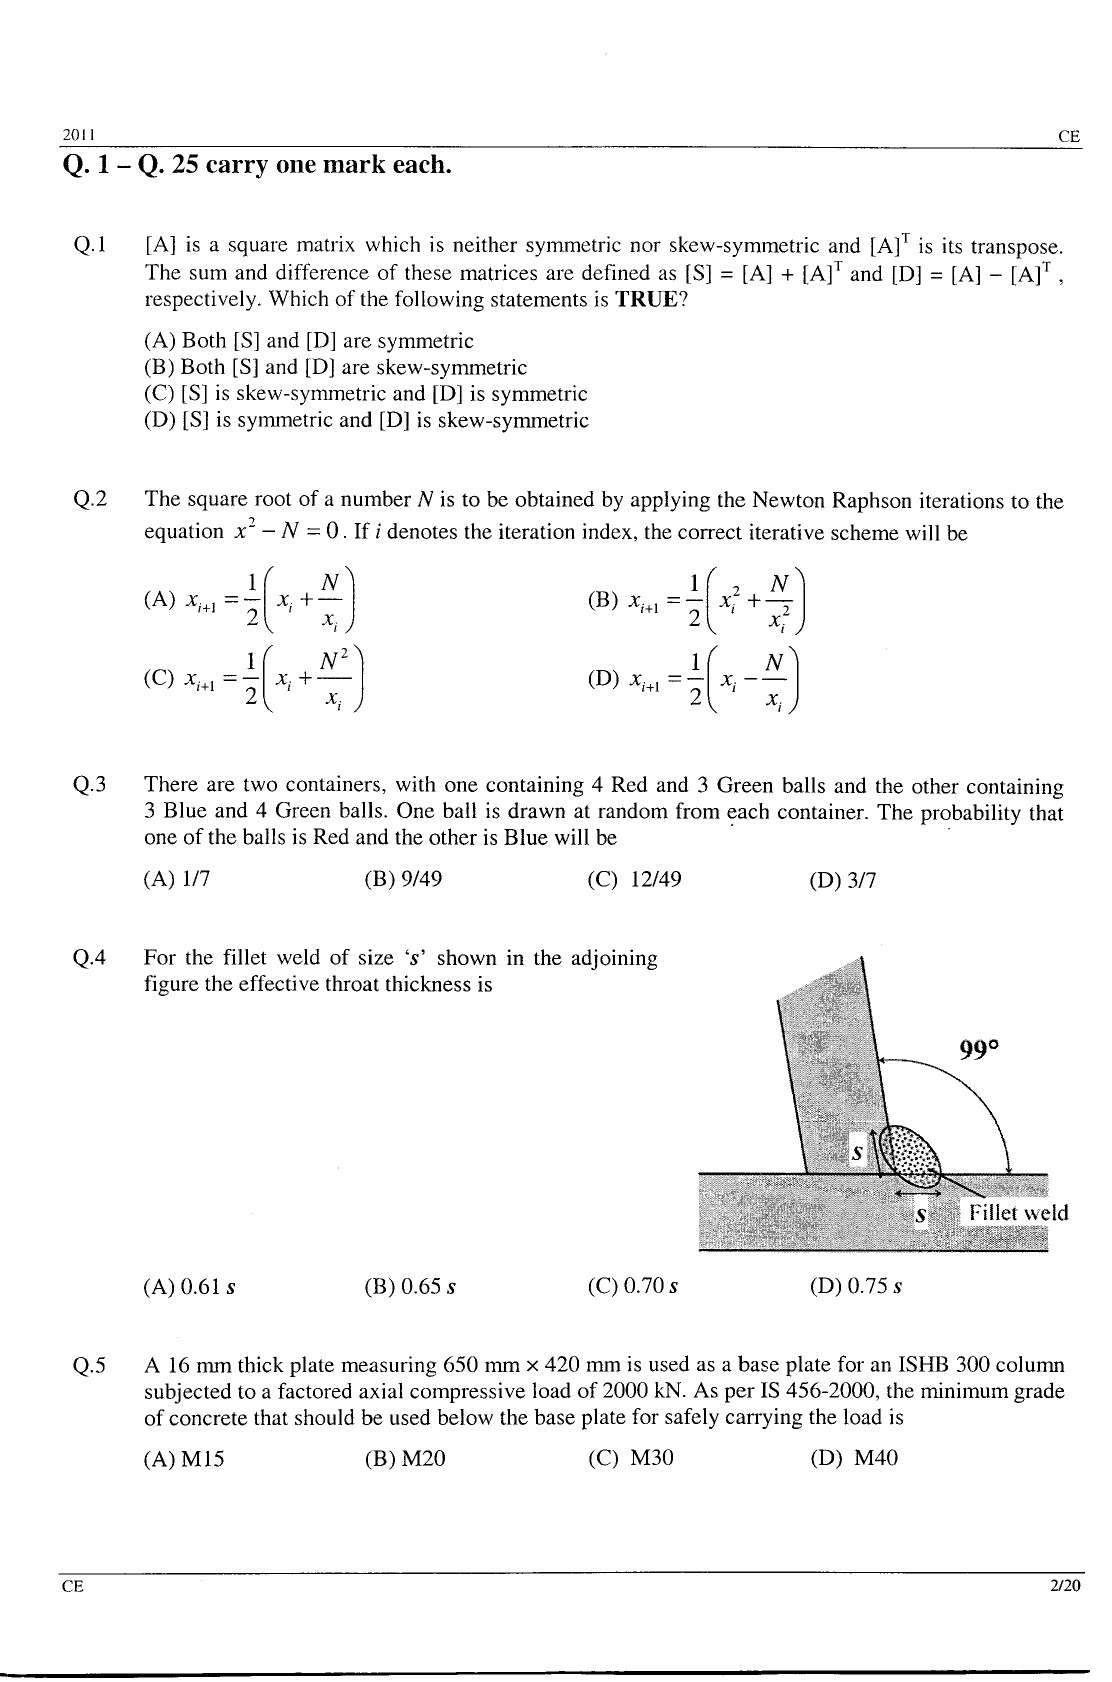 GATE Exam Question Paper 2011 Civil Engineering 2